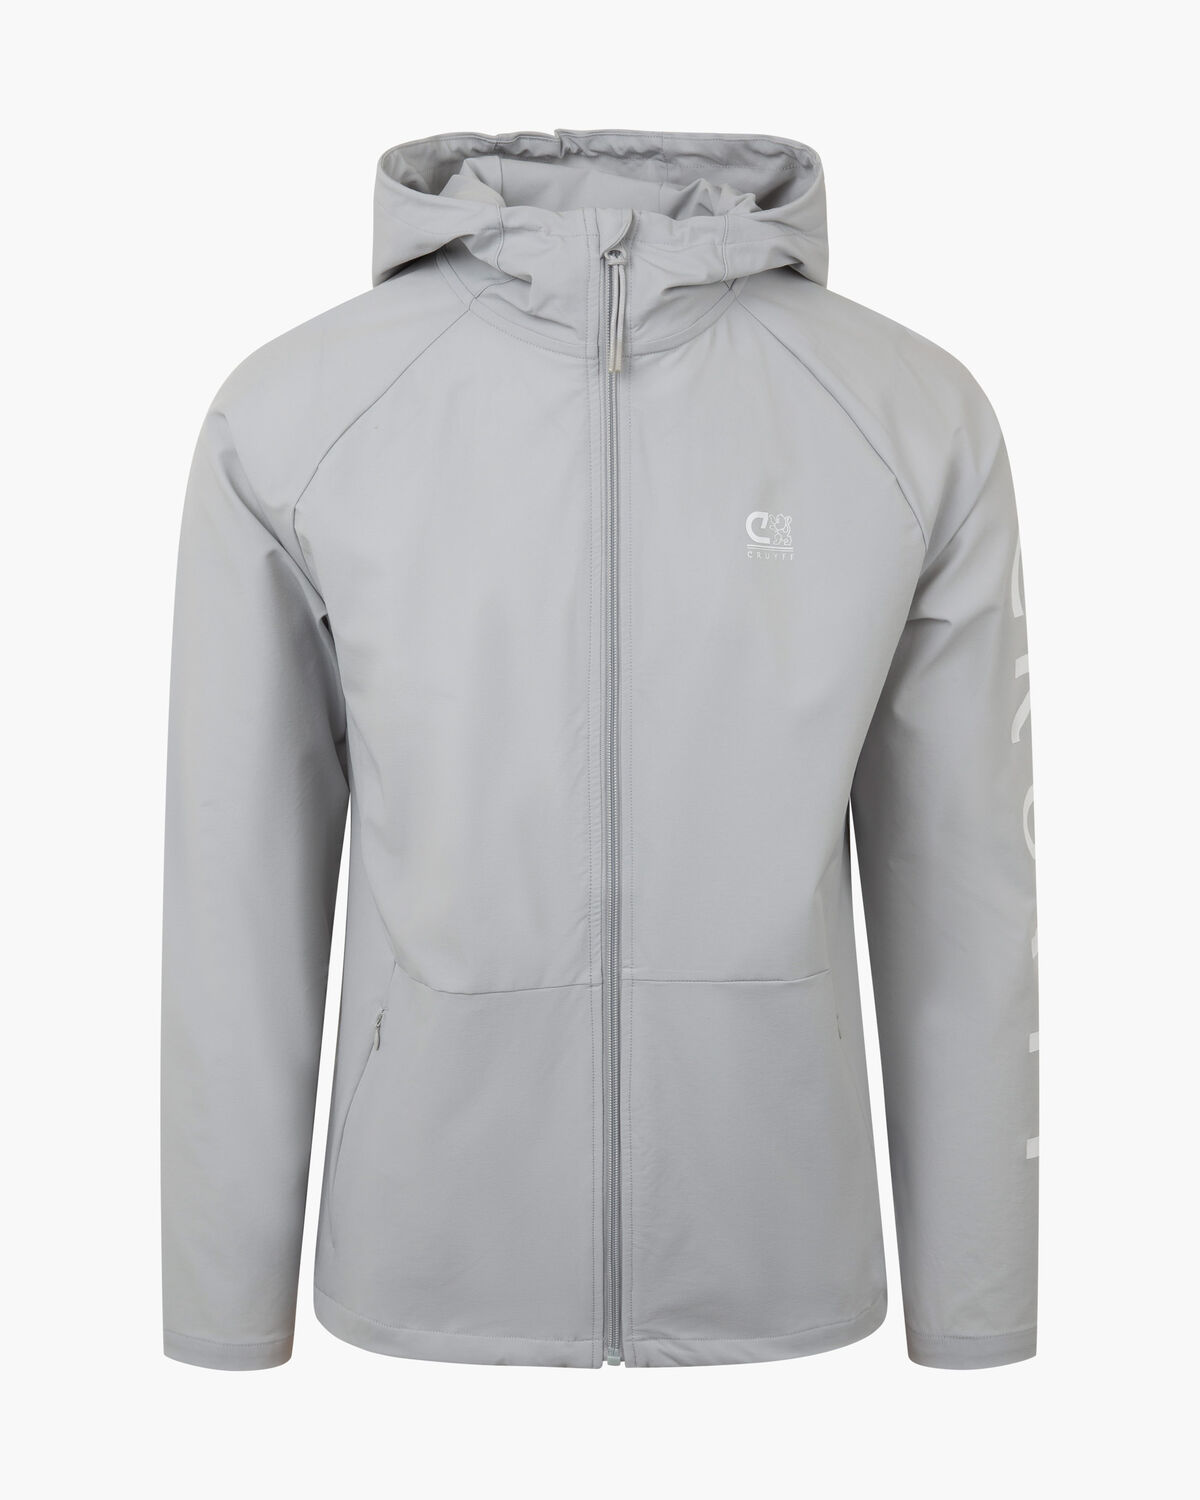 Shop Windbreaker Jacket | Official Cruyff UK Webshop